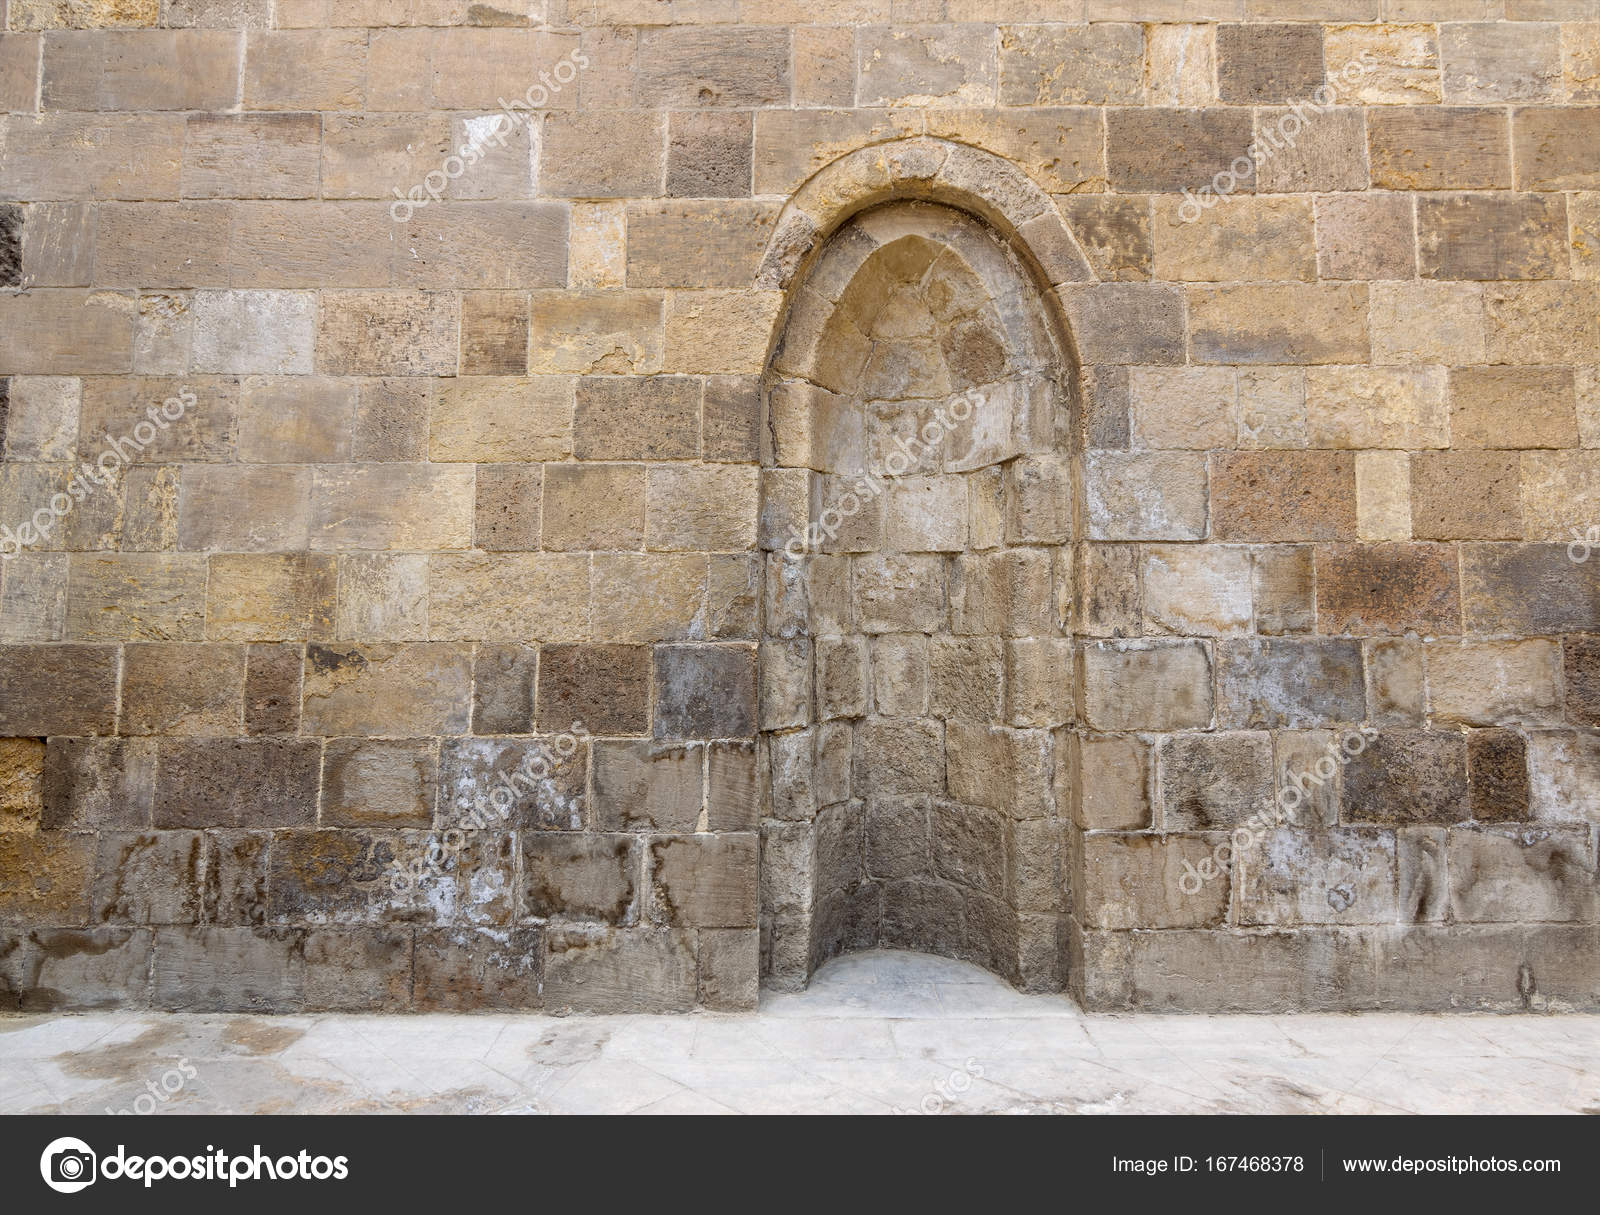 Stone wall with embedded niche — Stock Photo © KhaledElAdawy #167468378